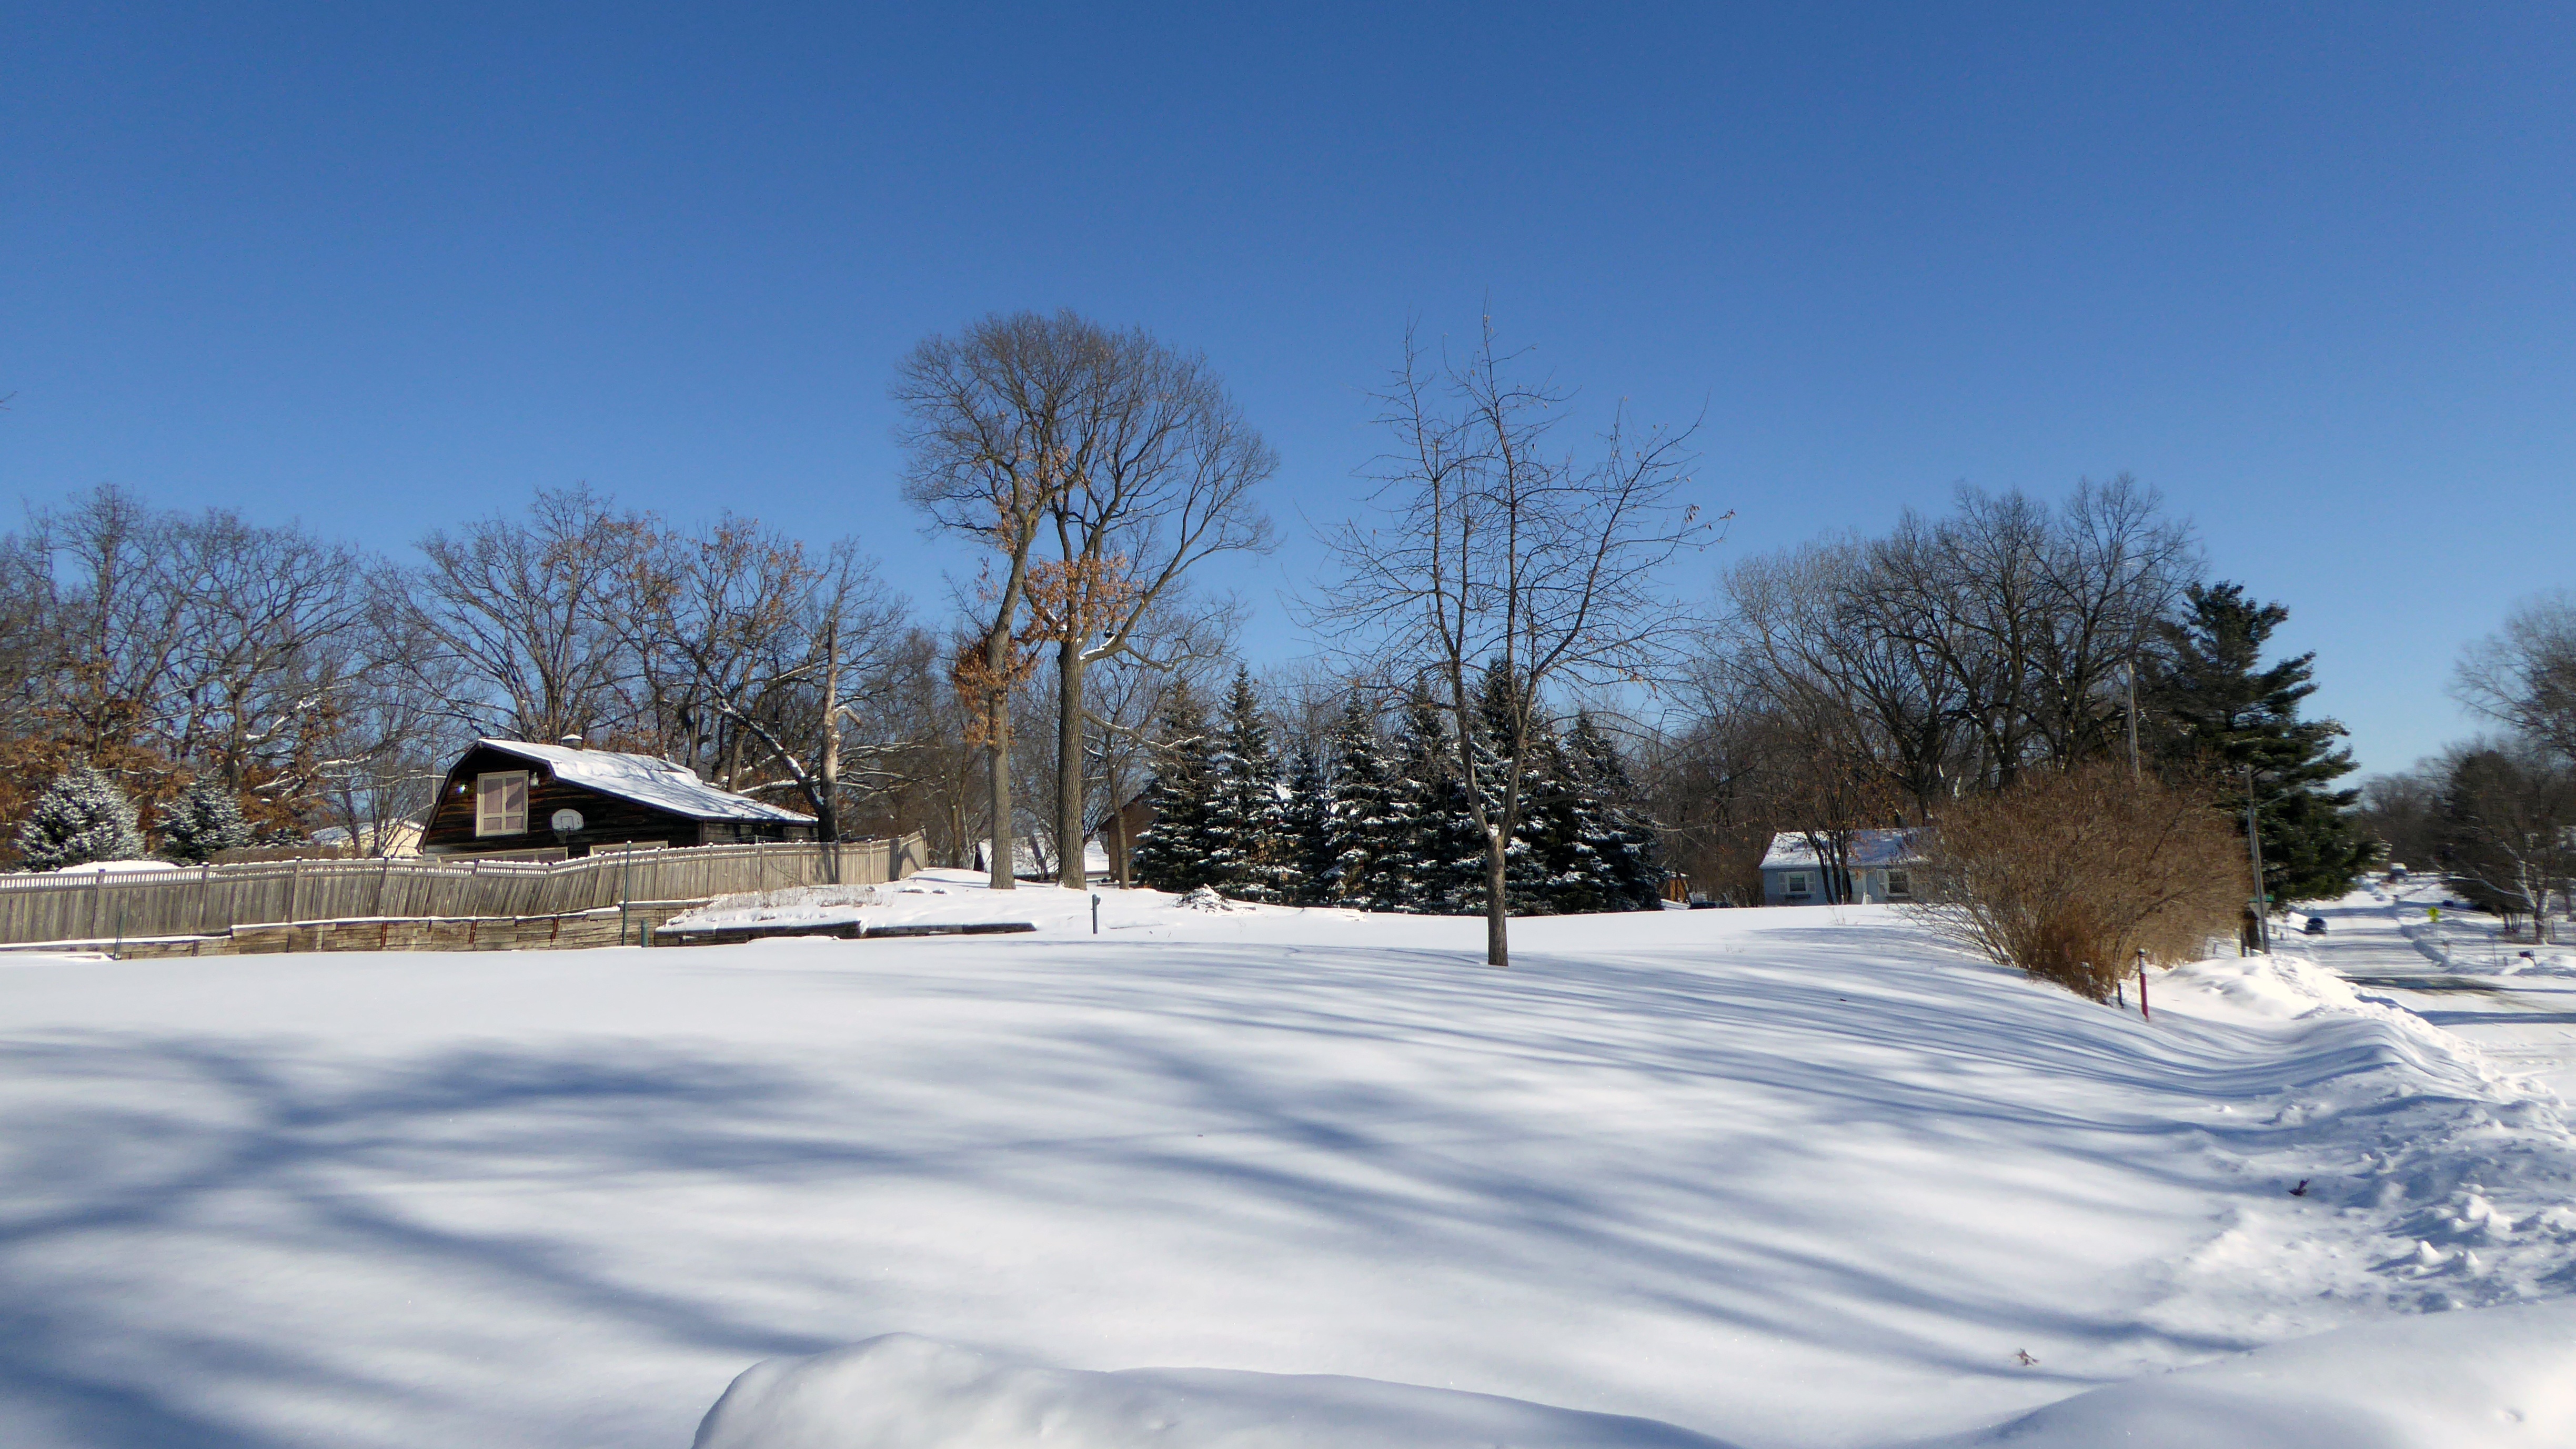 Yard property  in winter/spring 2018